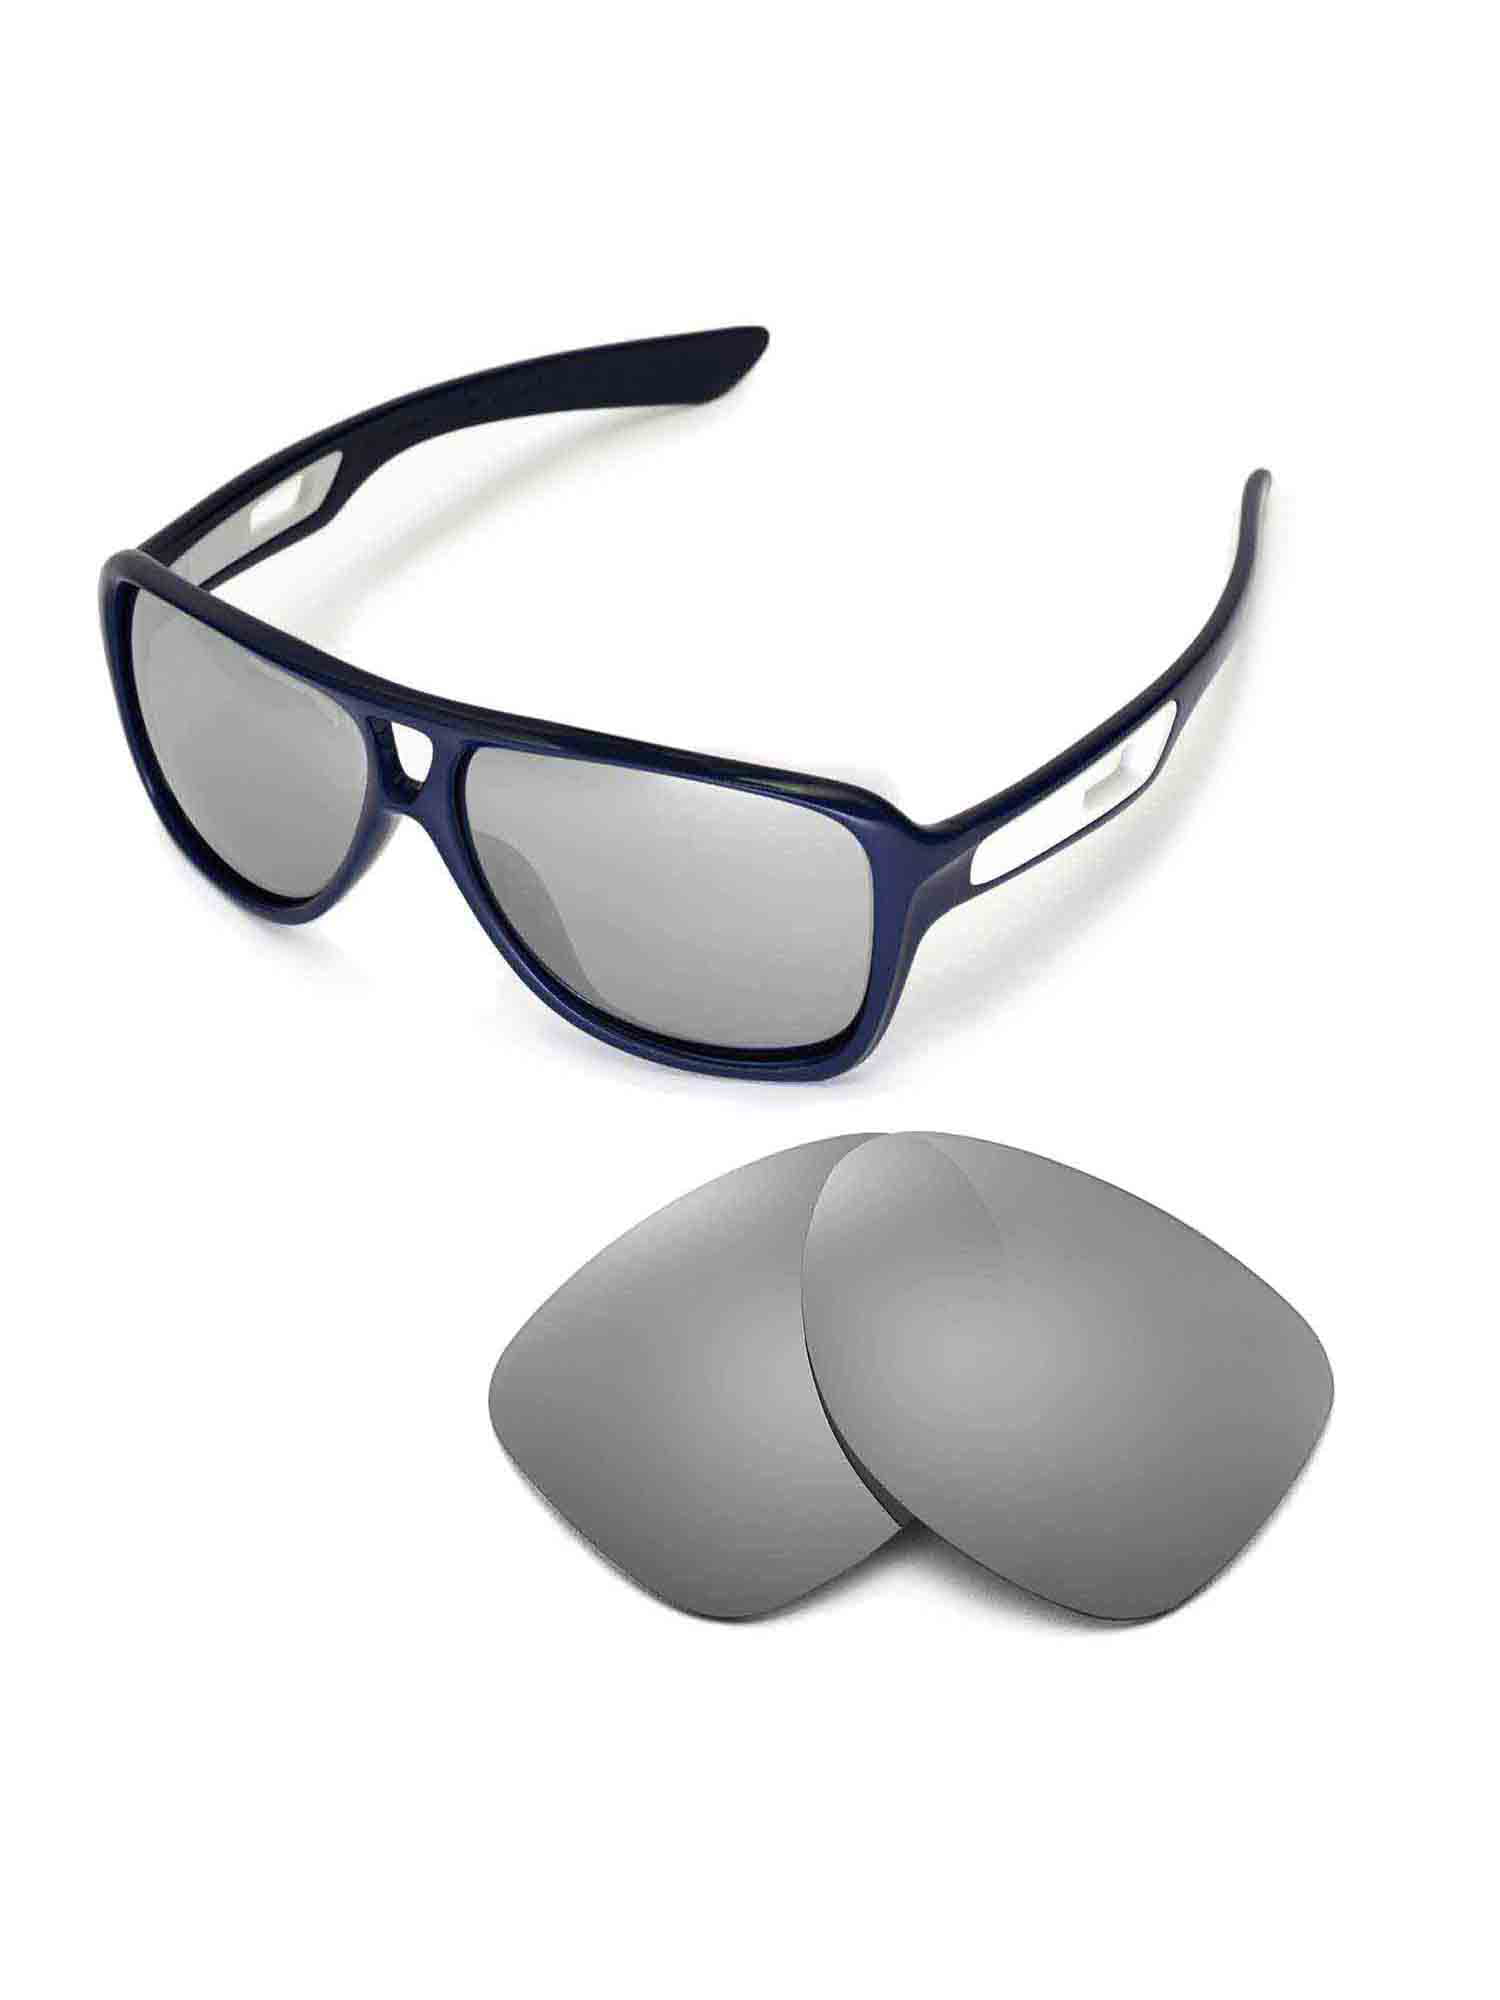 Titanium Polarized Replacement Lenses for Oakley Dispatch II Sunglasses -  